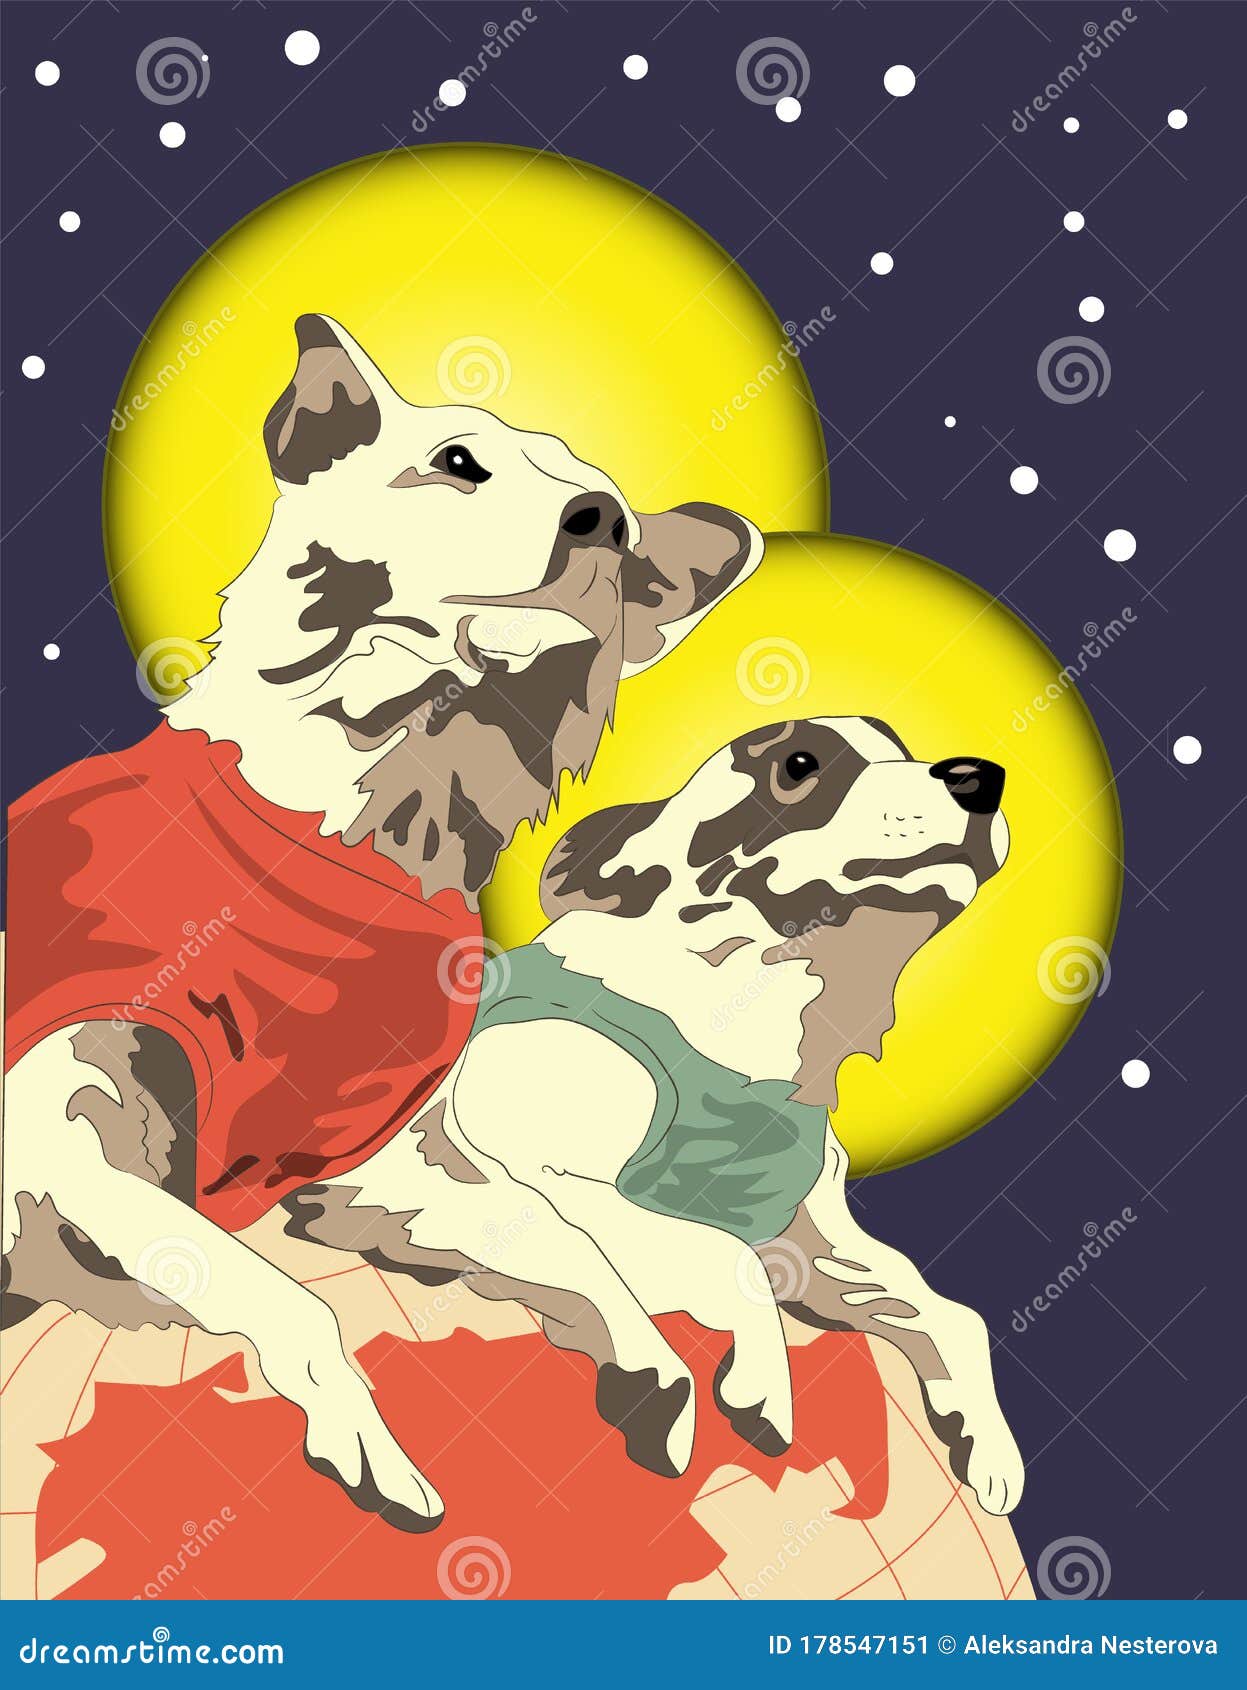 Strelka Space Dogs" Soviet Space Propaganda Poster Or Canvas Print "Belka 